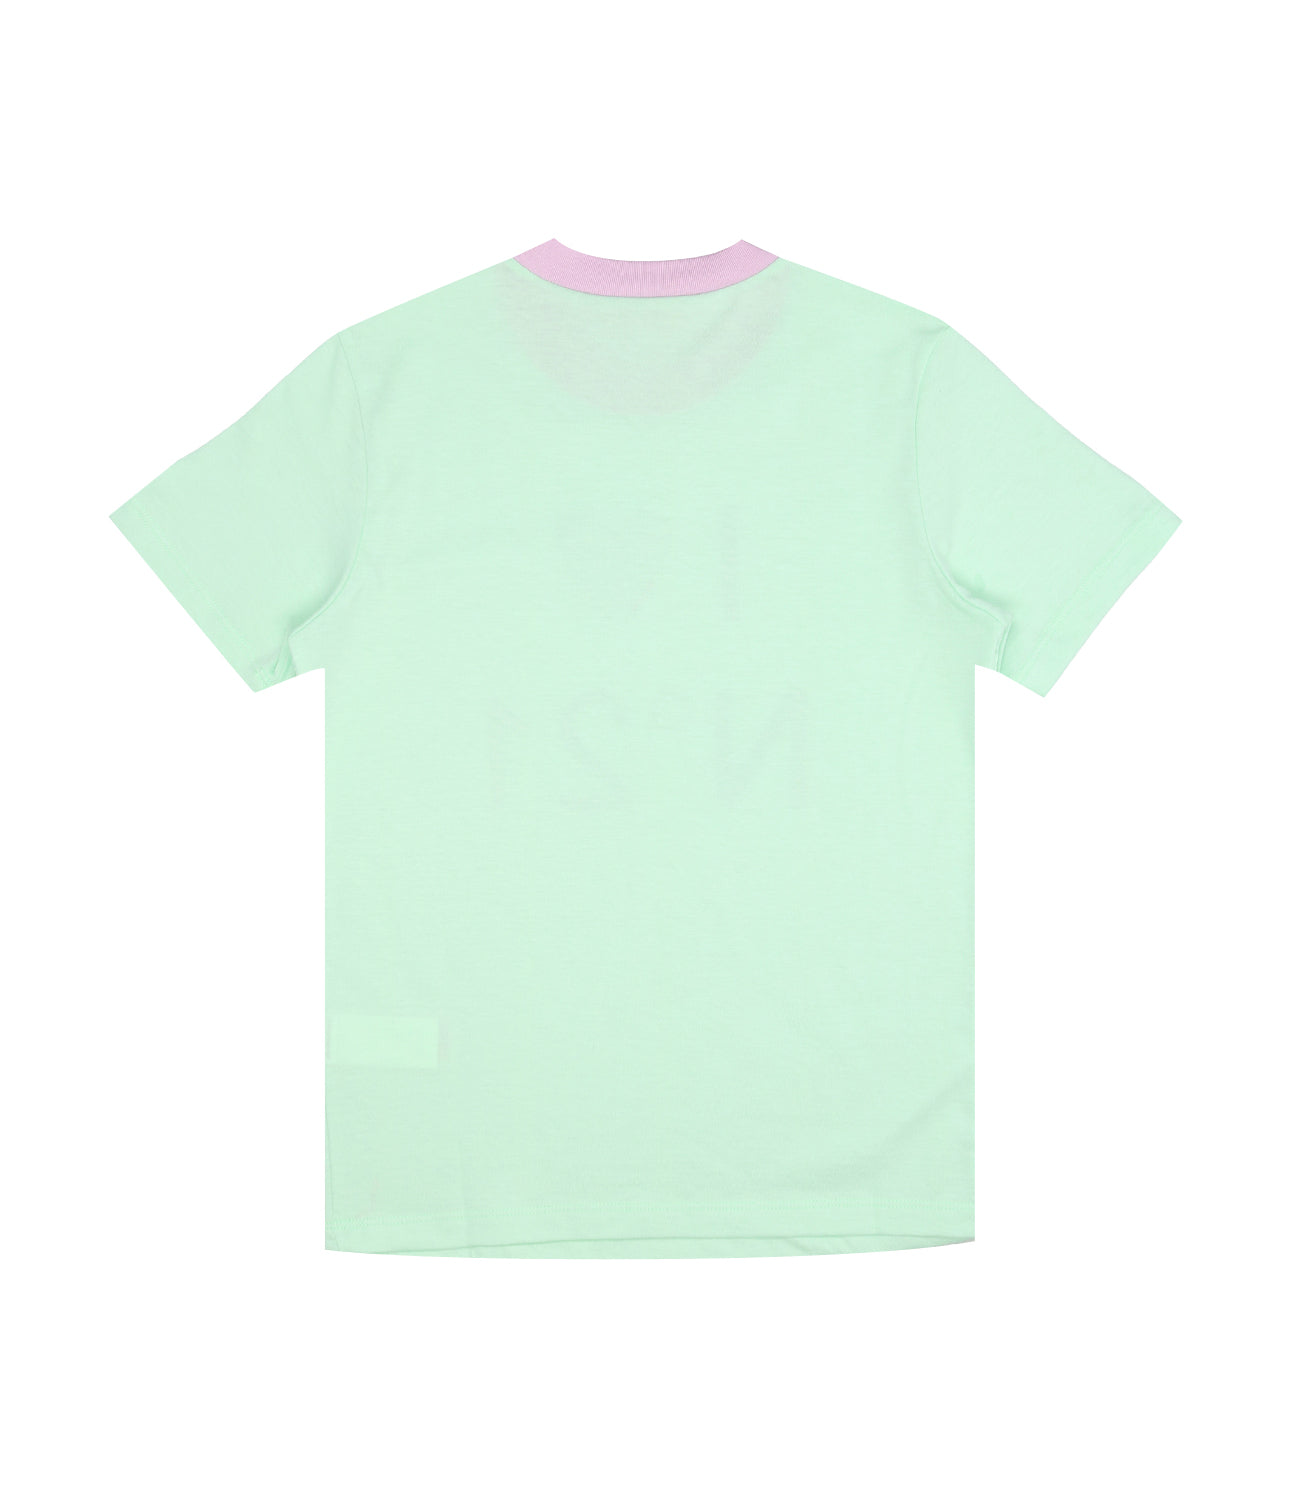 N 21 Kids | T-Shirt Verde Acqua